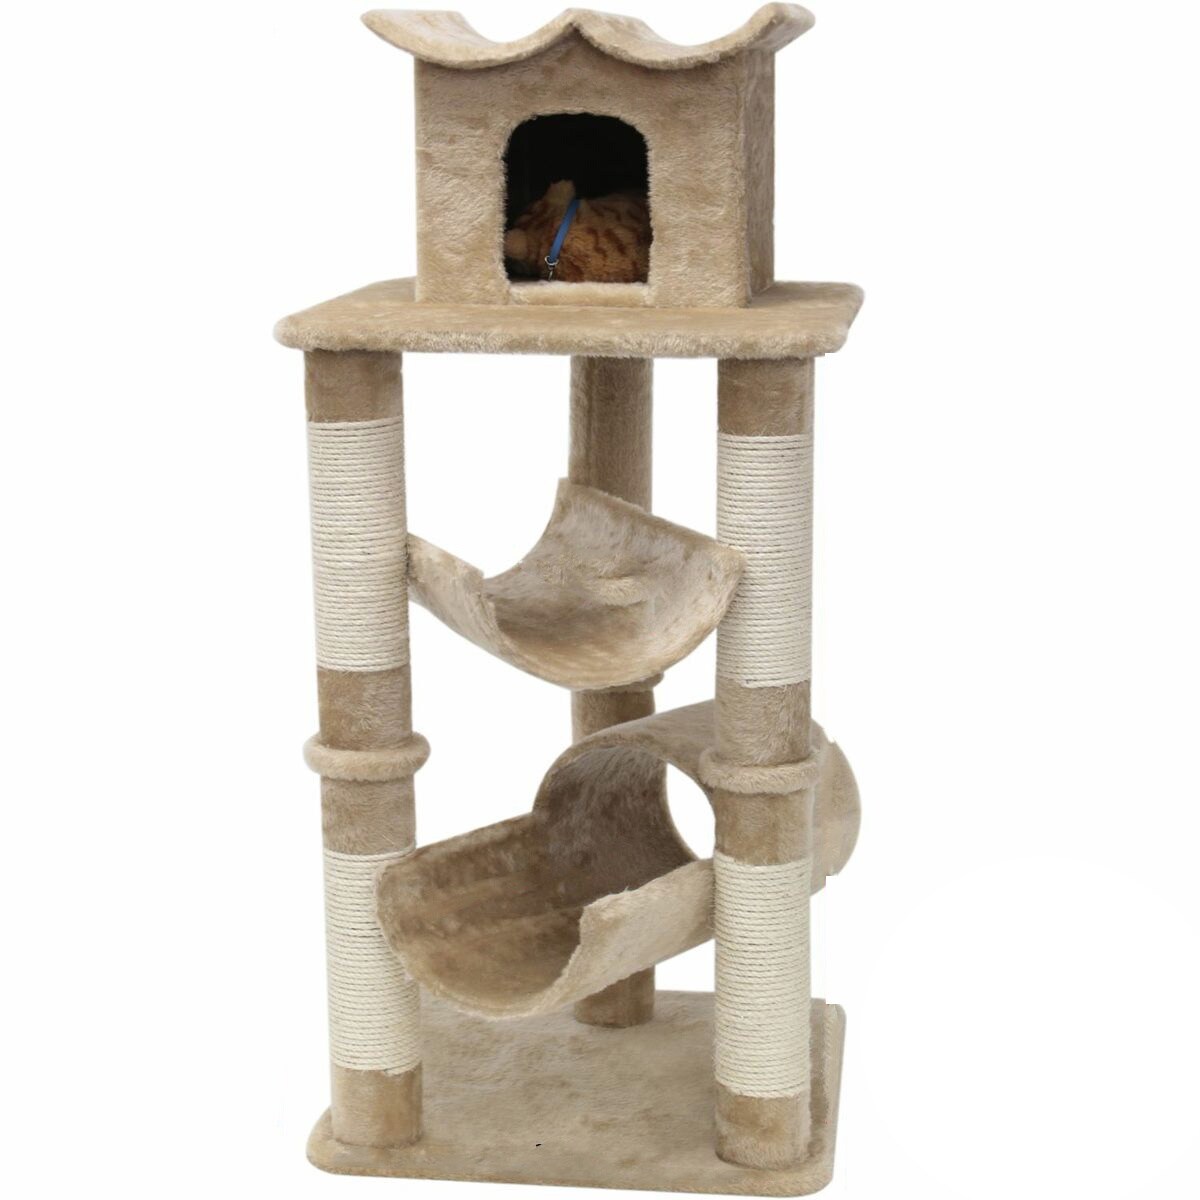 Majestic 47 inch Casita Cat Faux Fur Furniture Tree Today $91.99 3.0